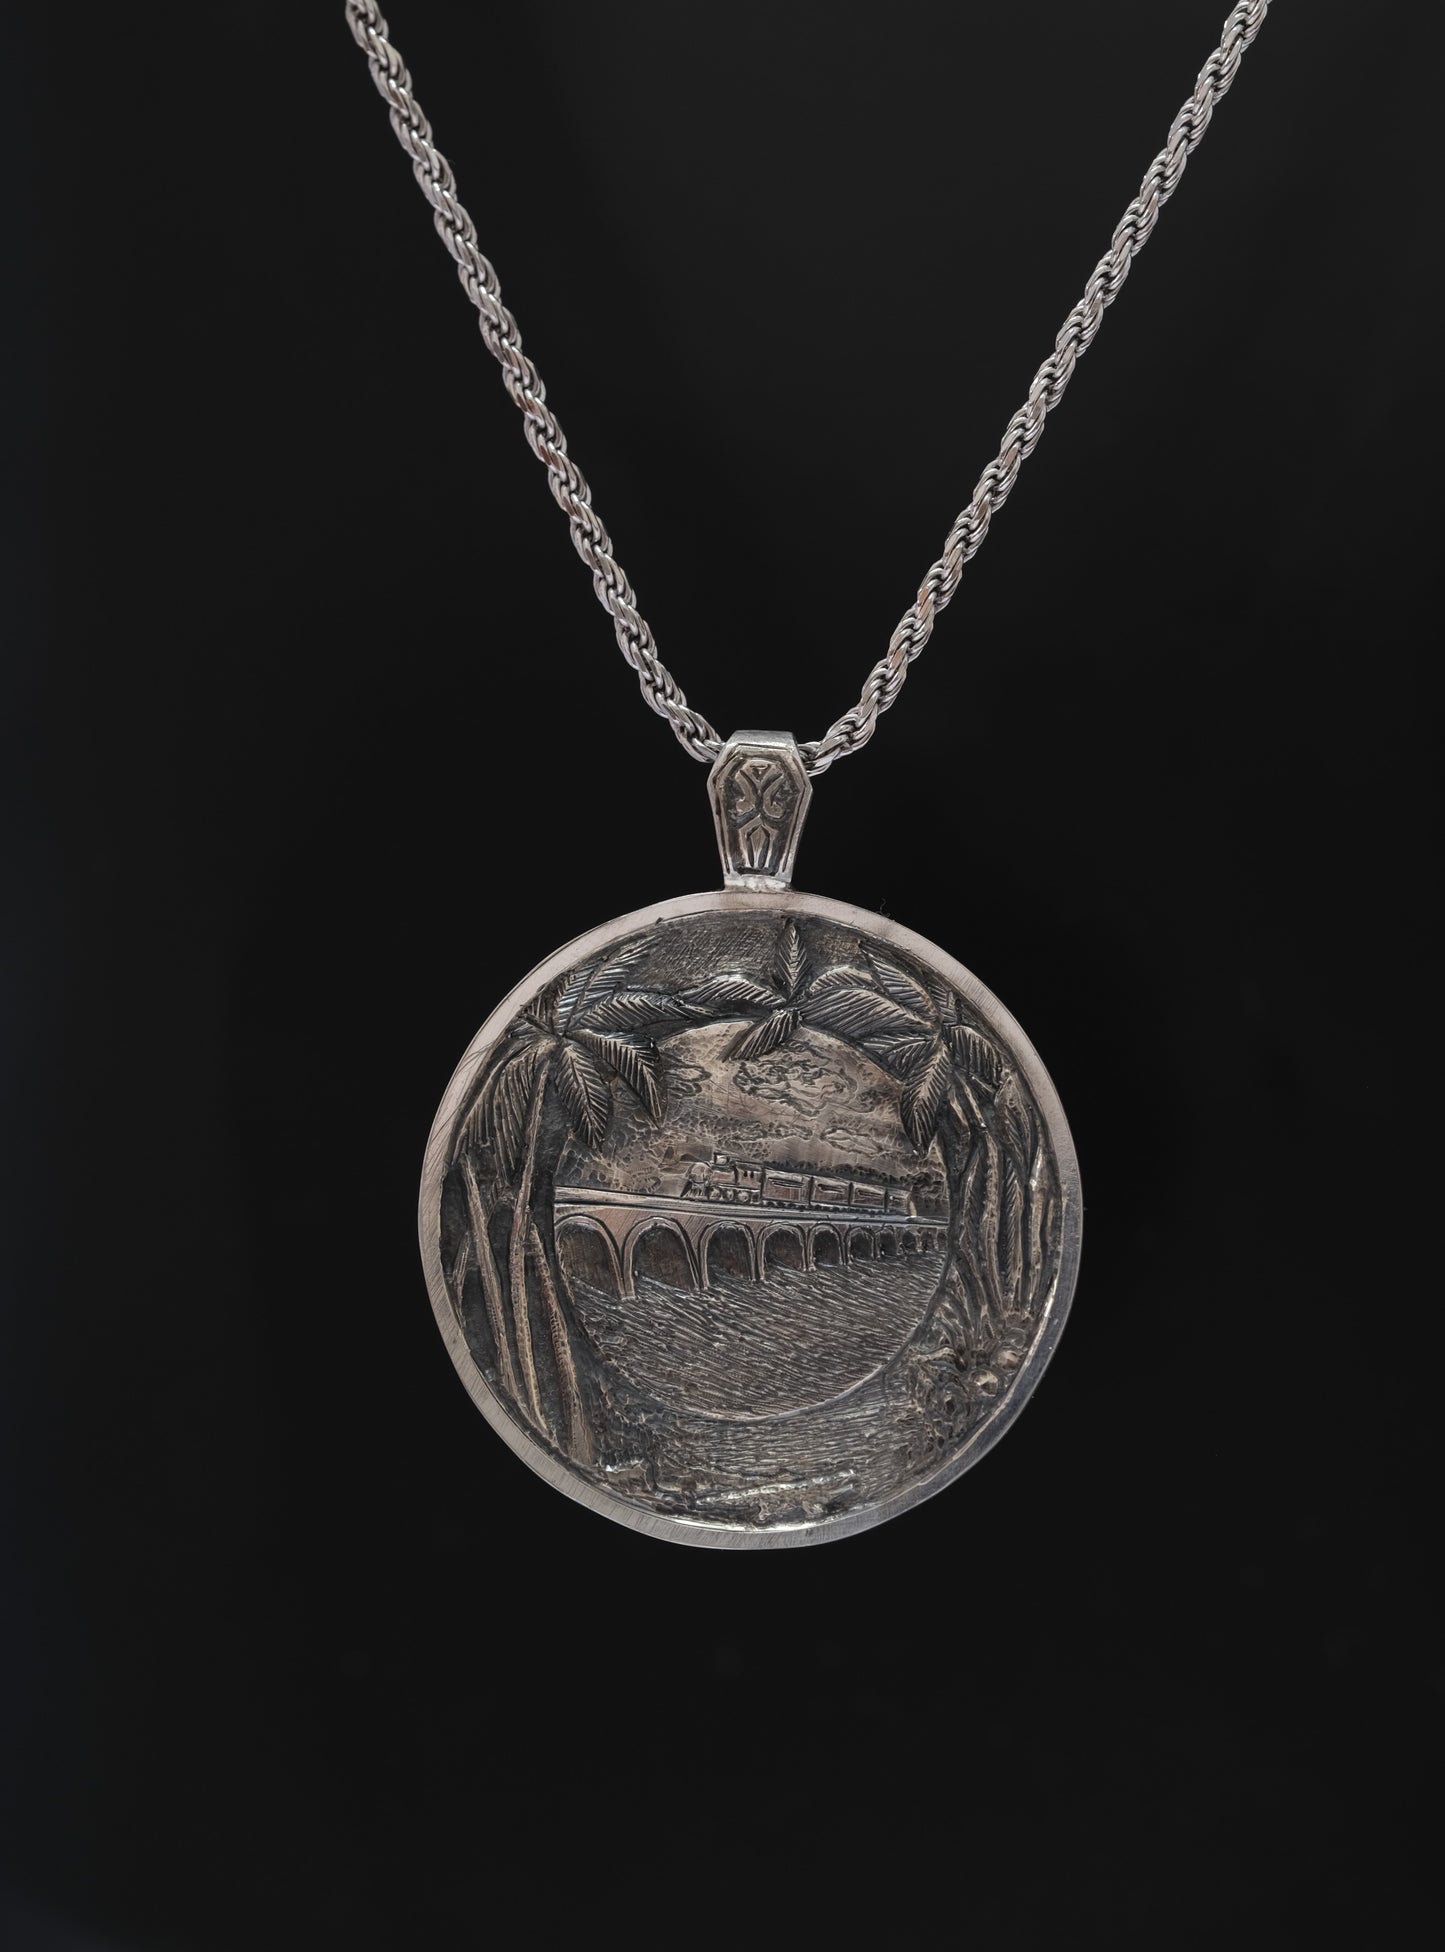 Key West Sterling Silver Medallion